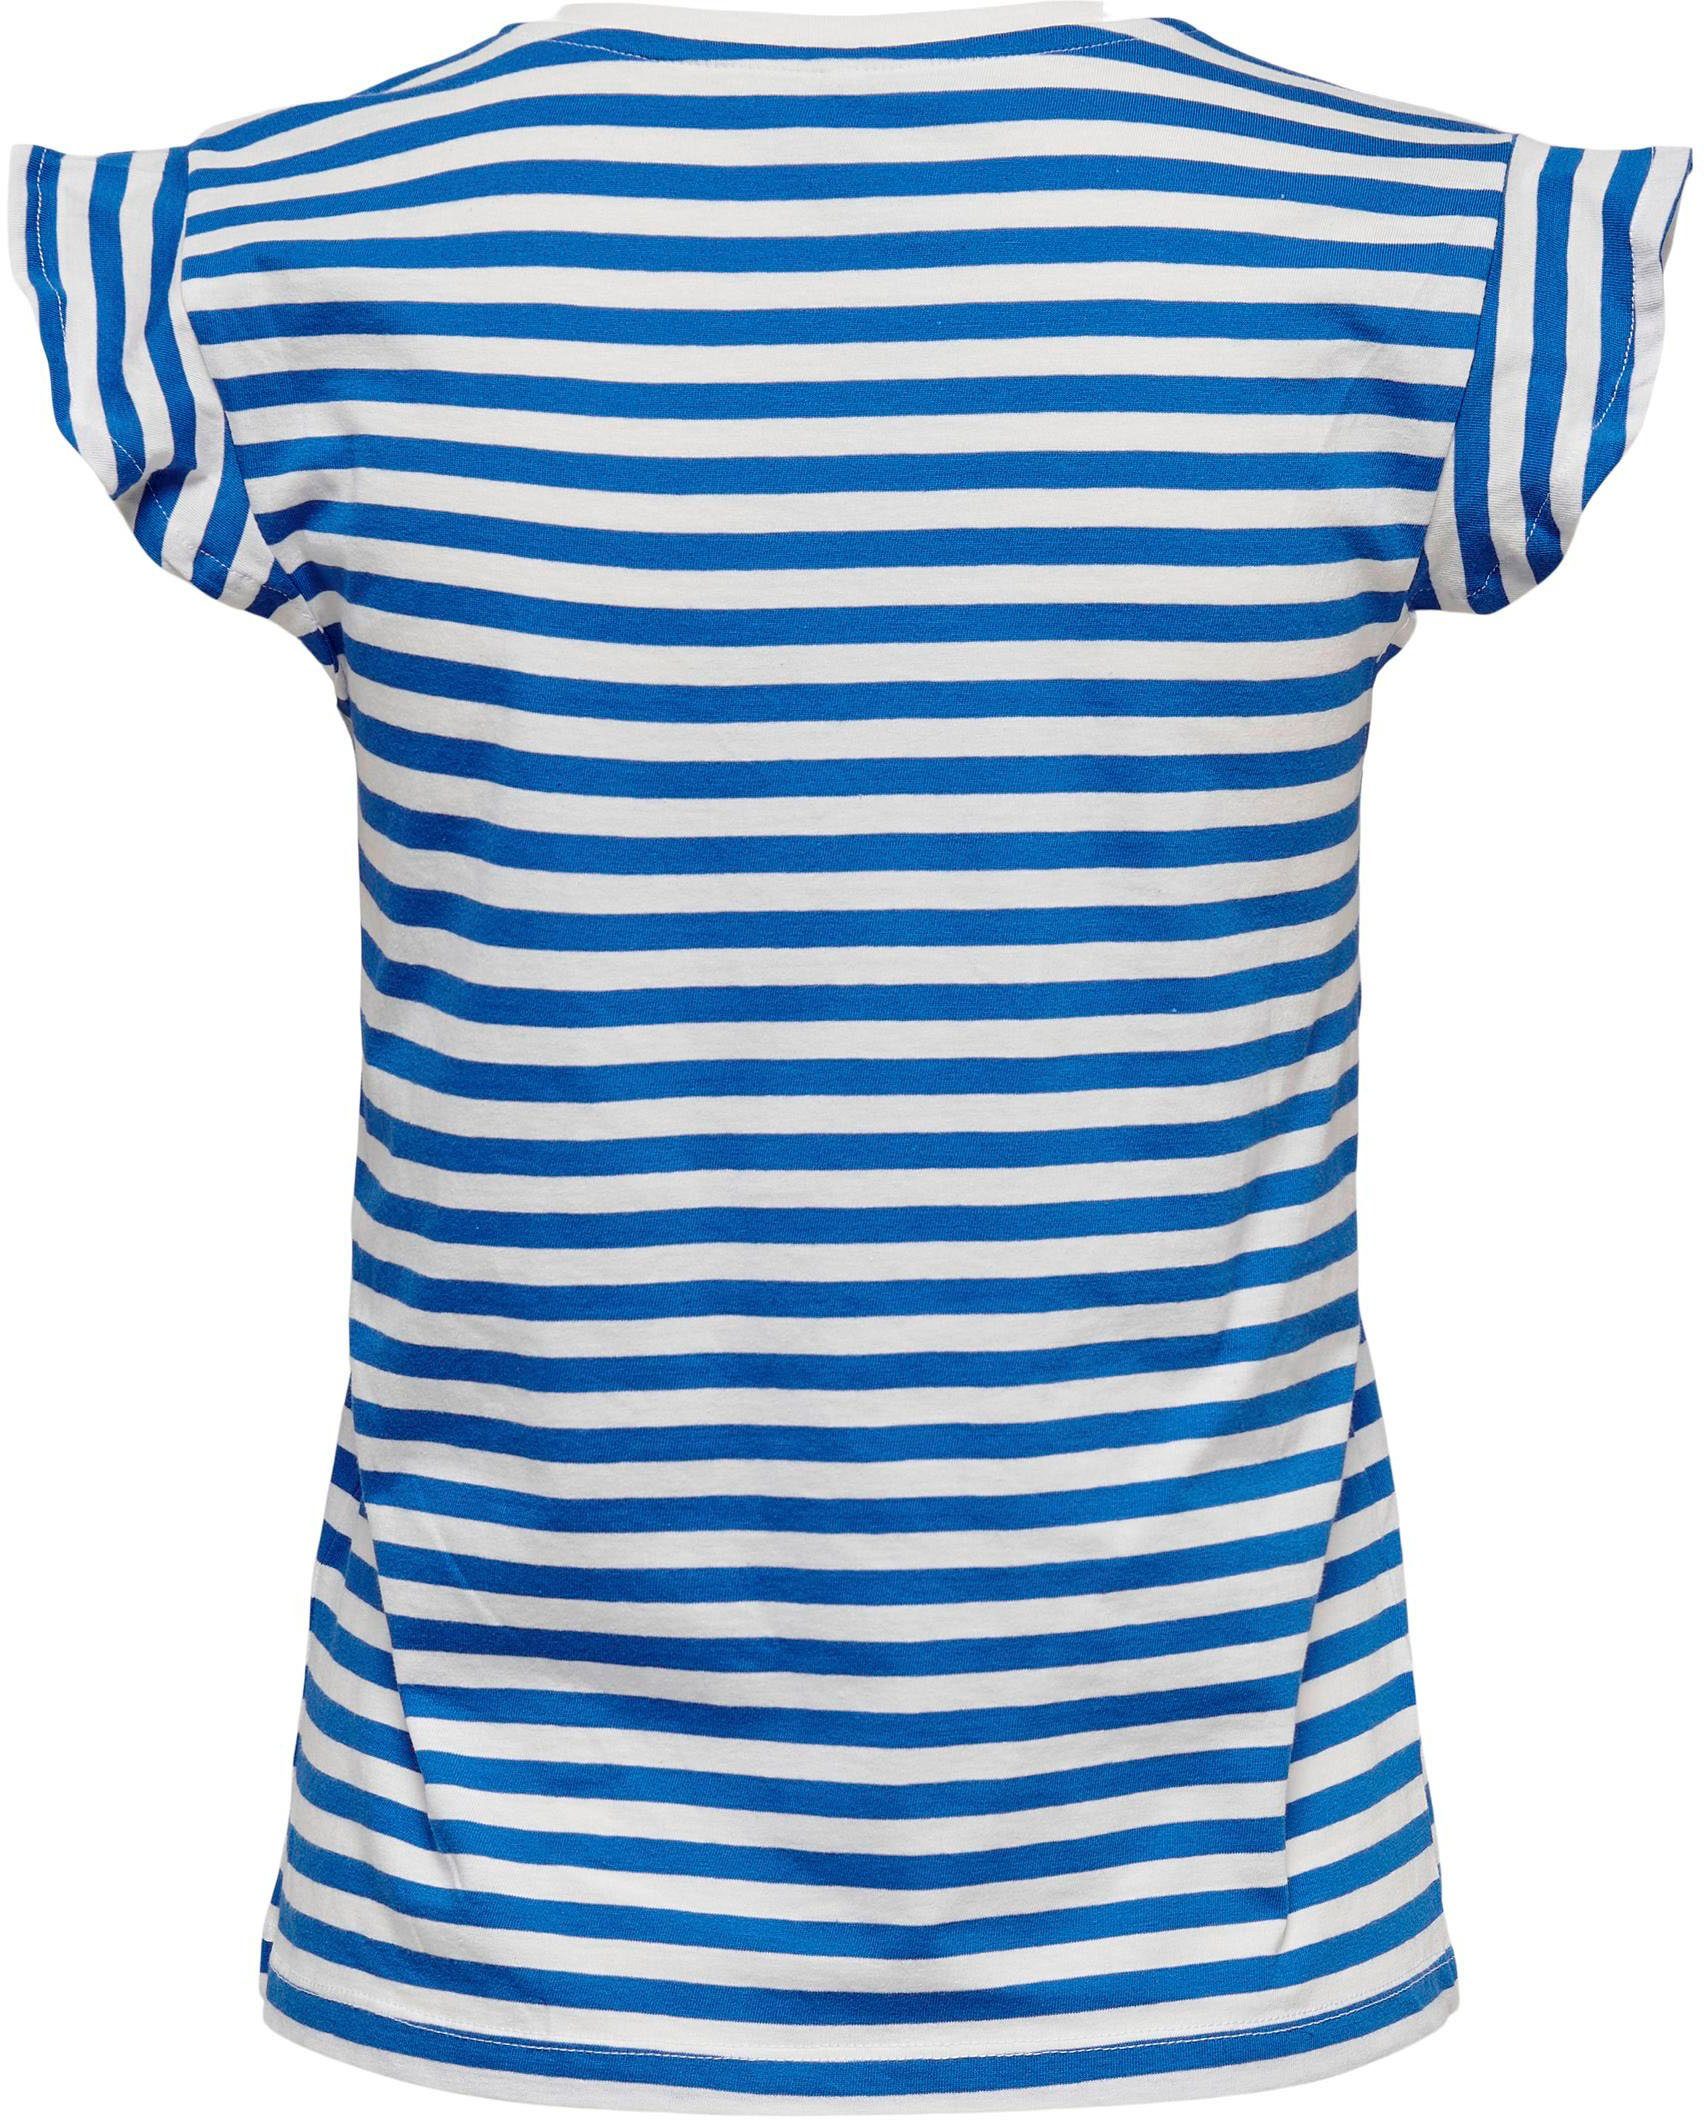 V-Shirt dancer S/S ONLMAY ONLY Blue Strong TOP Stripes:Cloud V-NECK FRILL